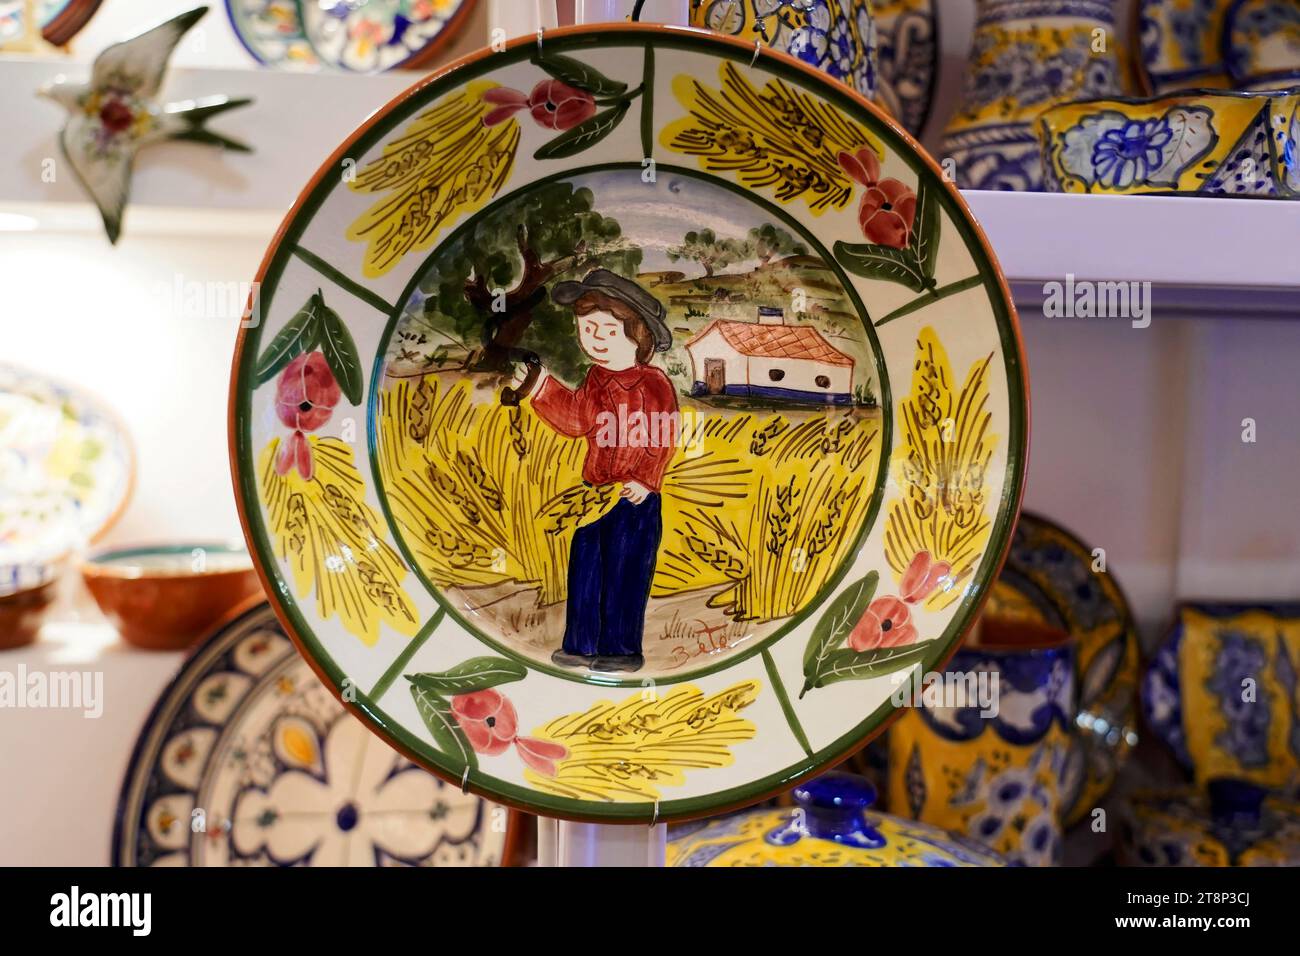 Souvenirs, Töpferwaren, Altstadt, Gasse, Häuser, Tavira, Algarve, Portugal Stockfoto